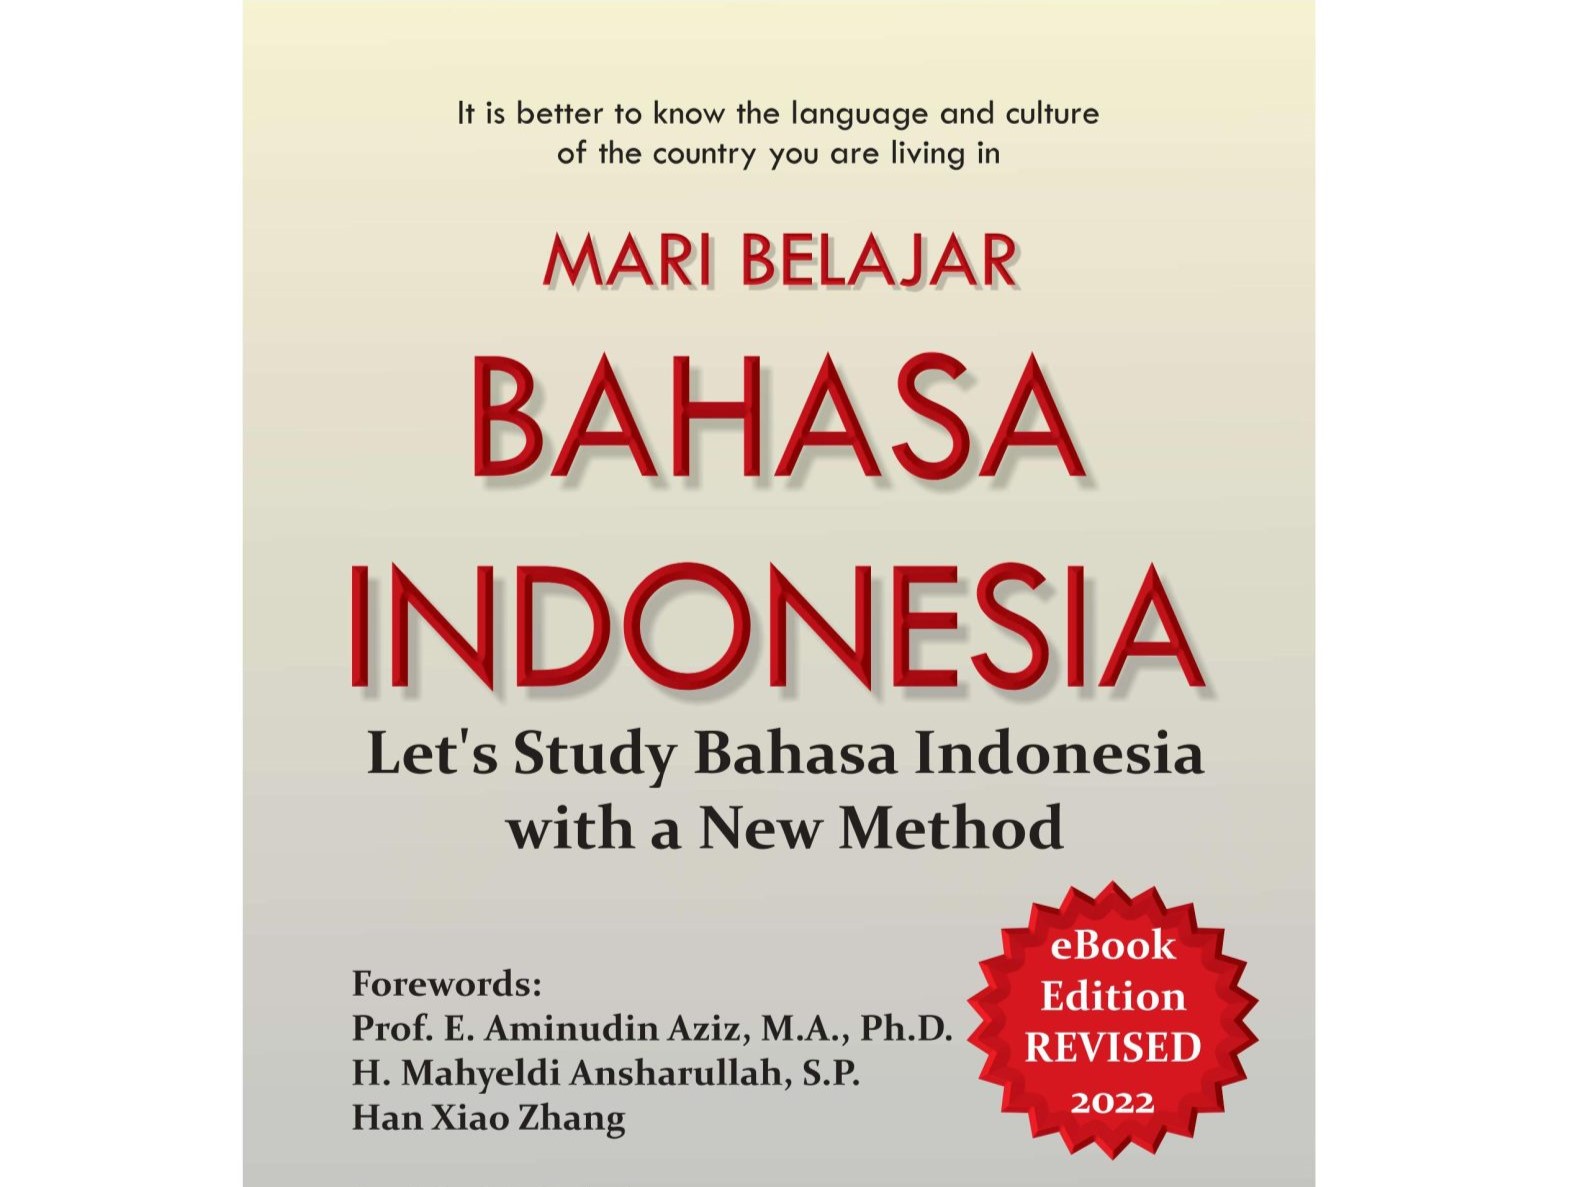 Revitalisasi Bahasa Indonesia di Luar Negeri – Ekspatriat Indonesia